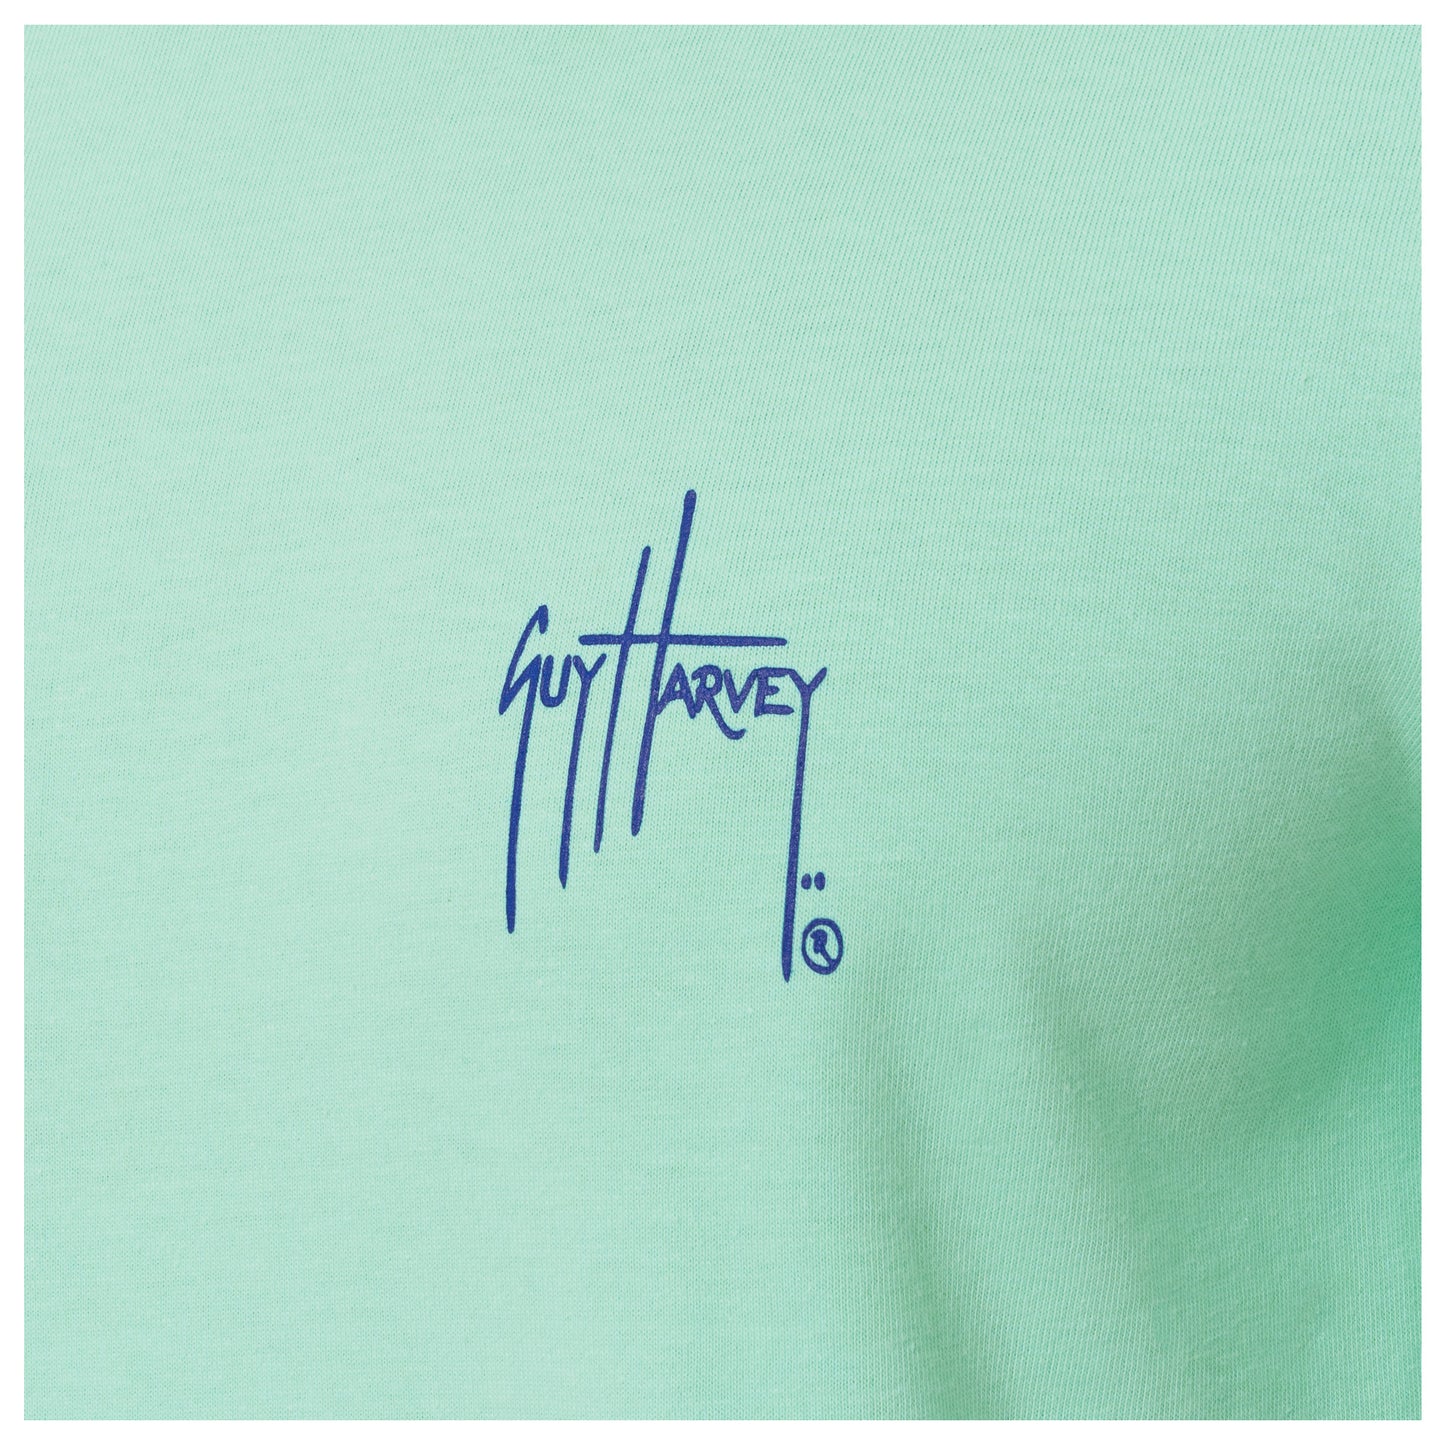 Men's Mahi Label Short Sleeve T-Shirt